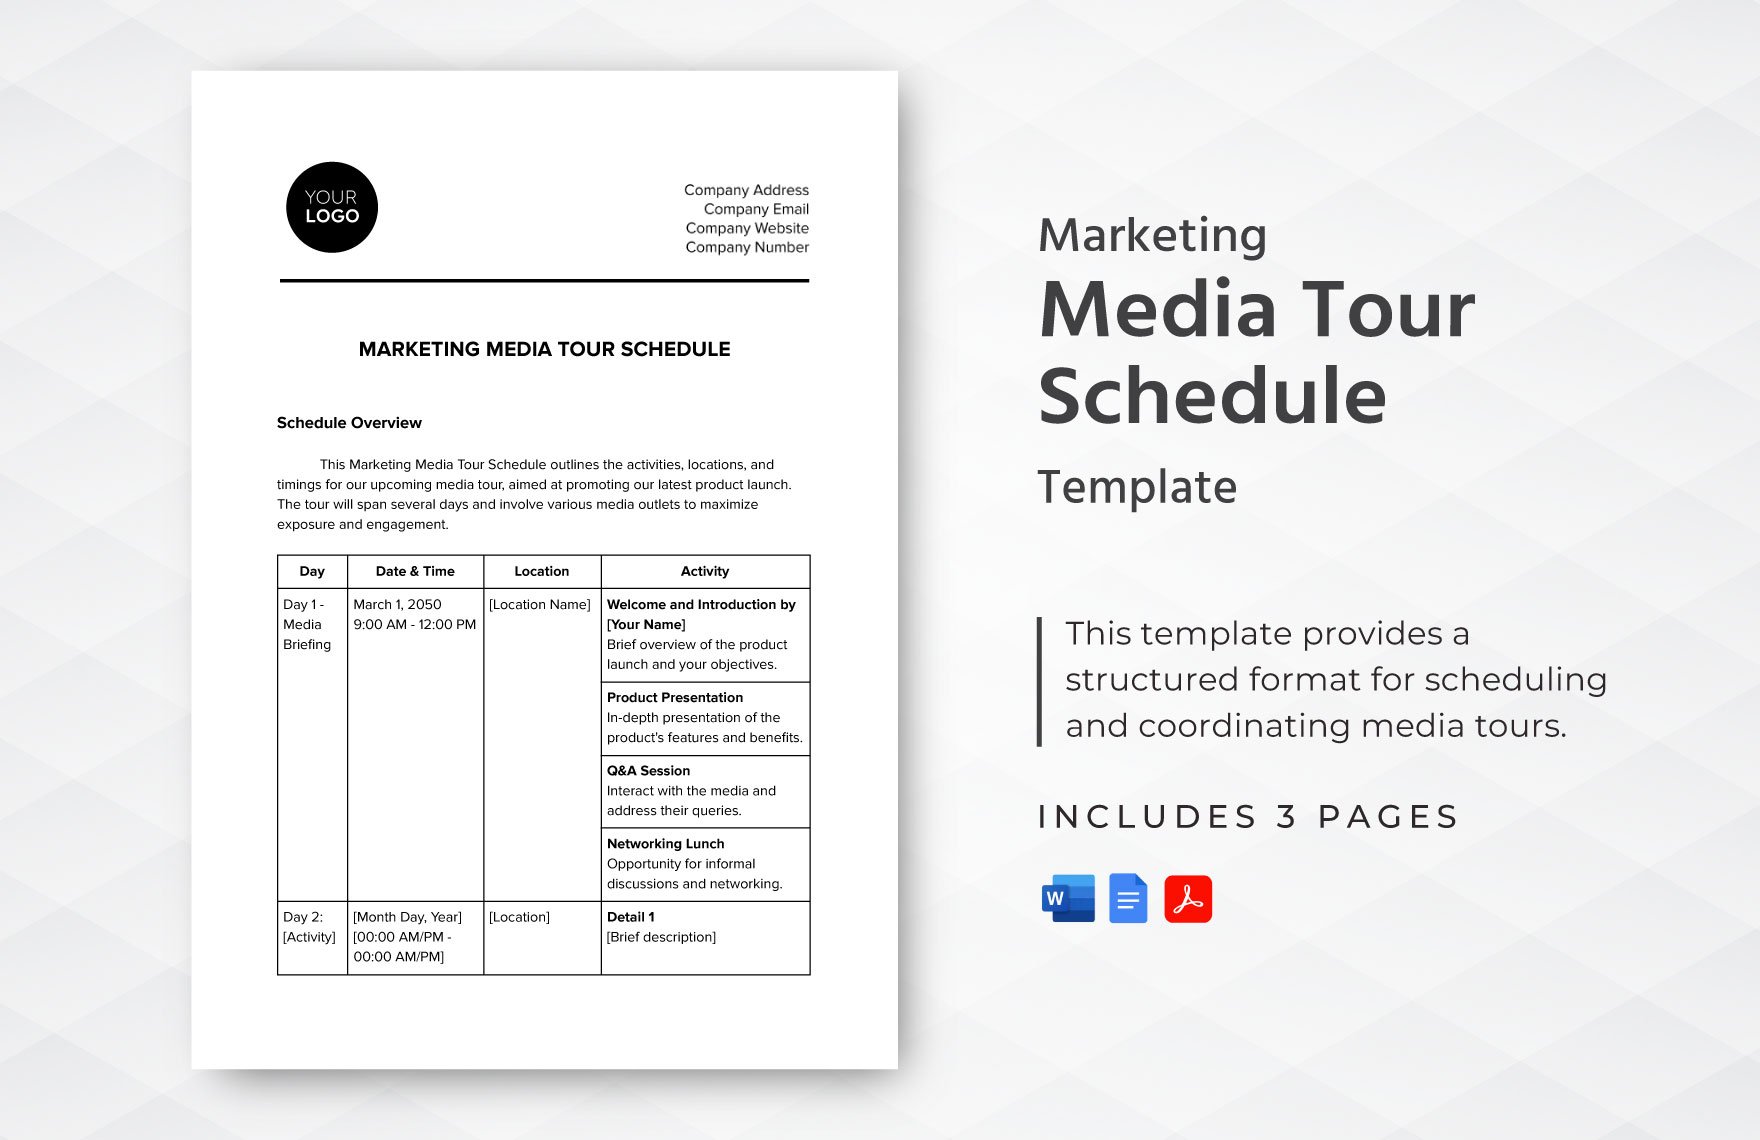 Marketing Media Tour Schedule Template in Word, Google Docs, PDF